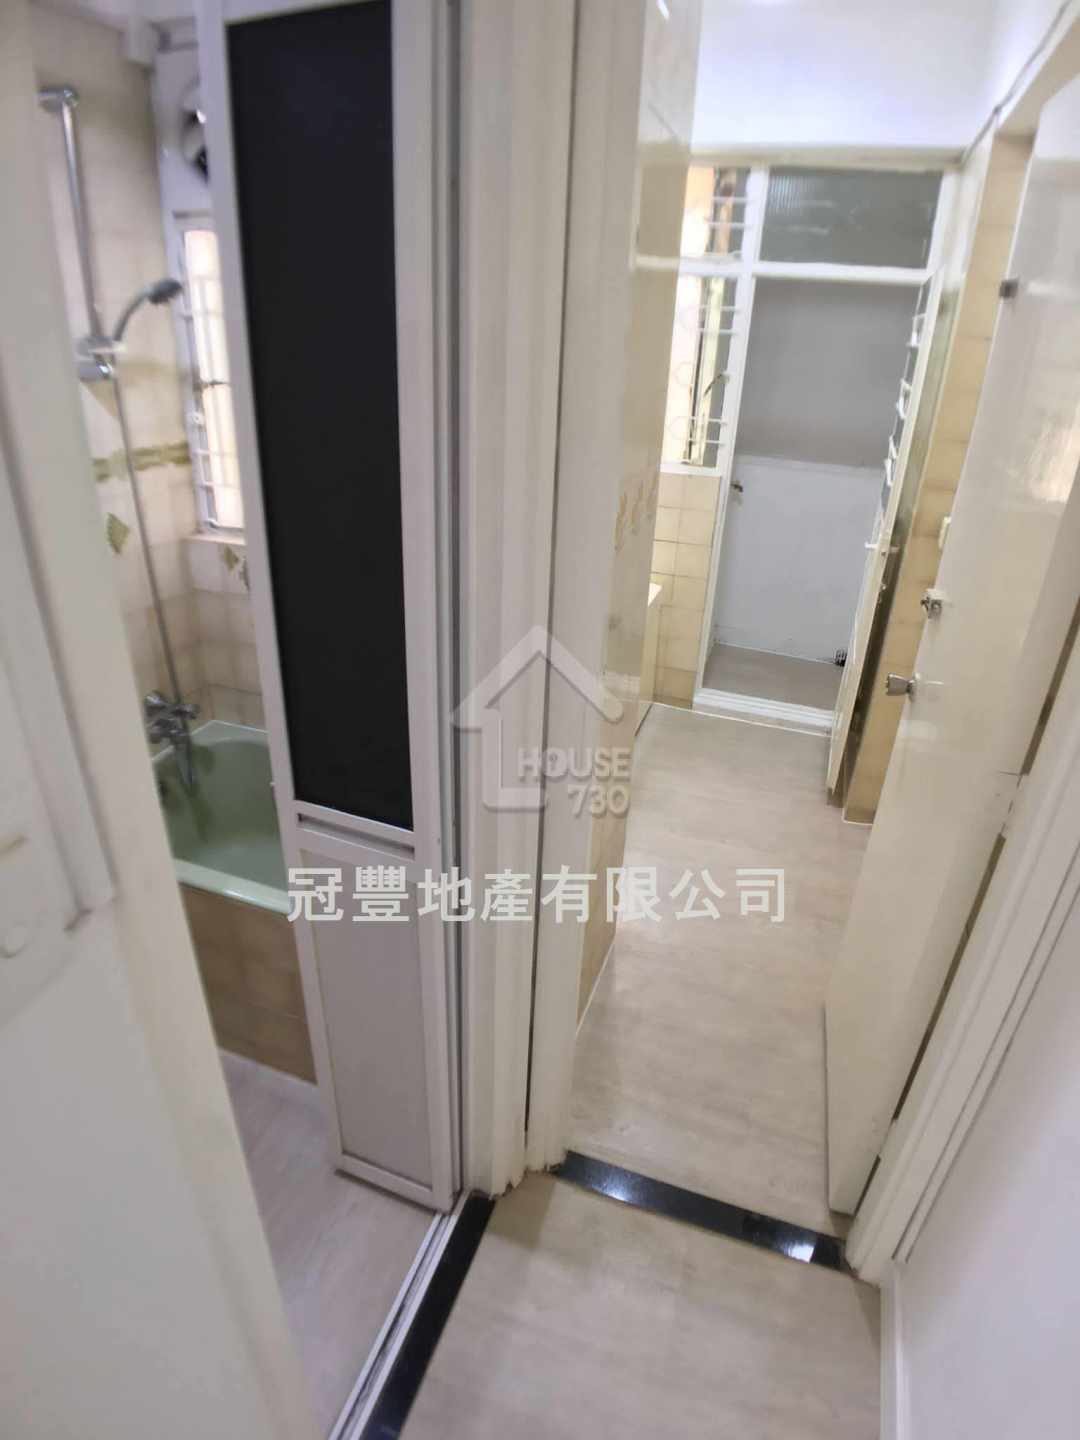 Sham Shui Po WANG TAK HOUSE Lower Floor House730-6864458